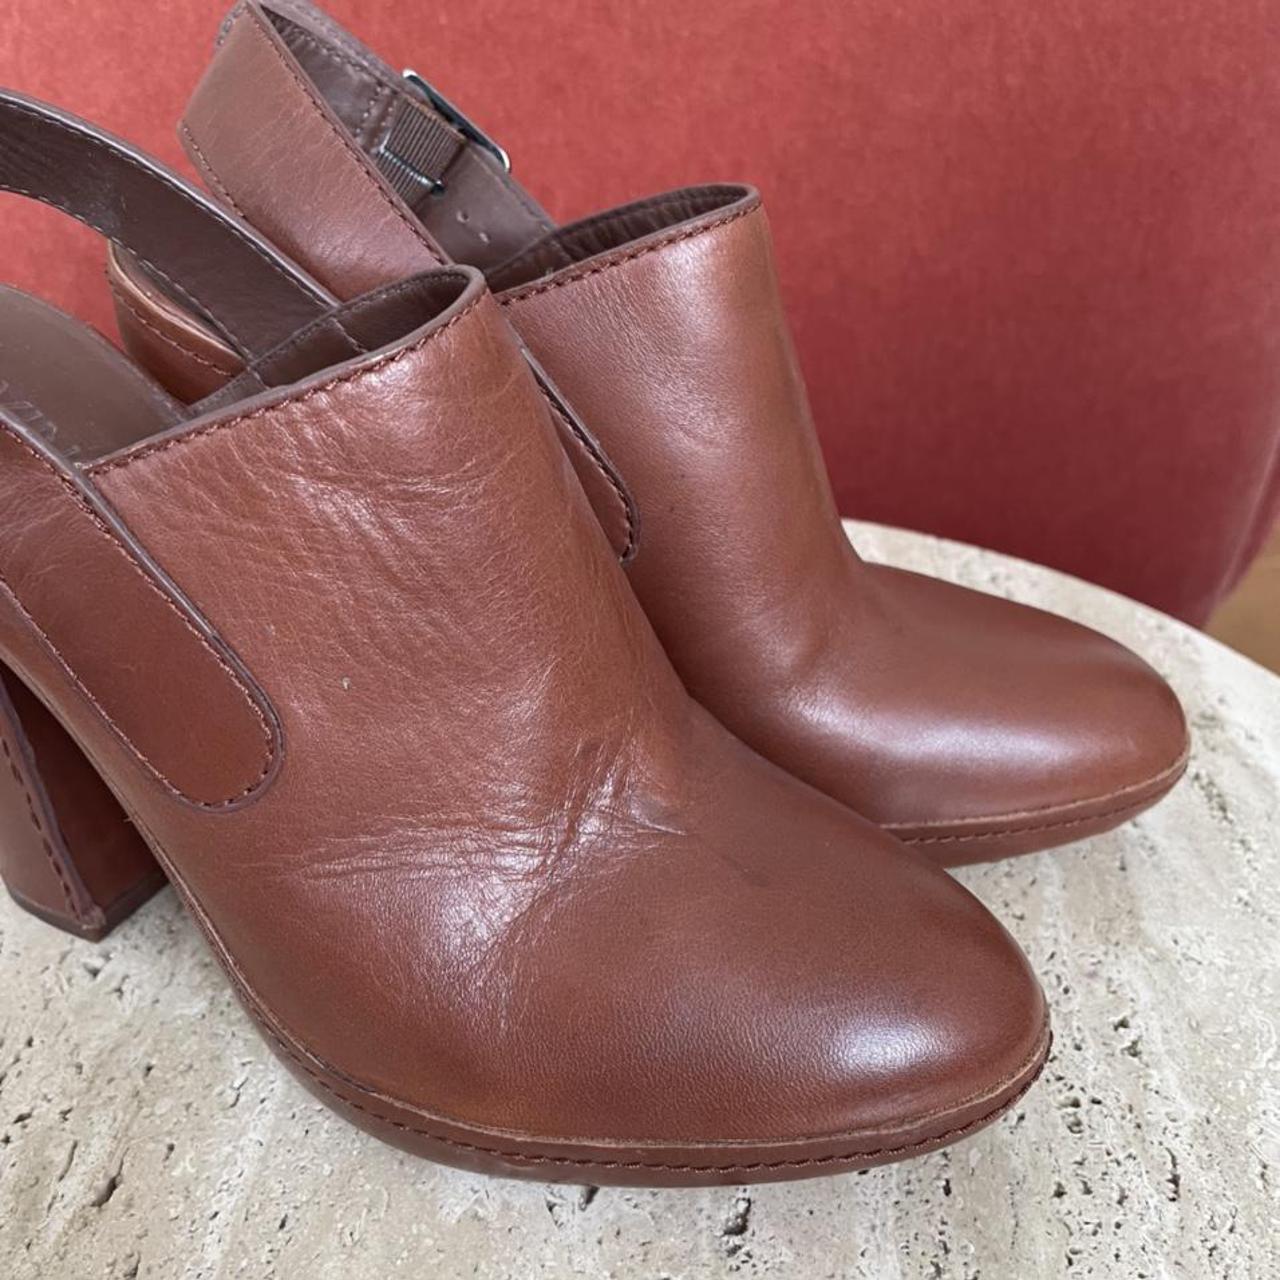 Product Image 2 - vince platform leather heels. fully